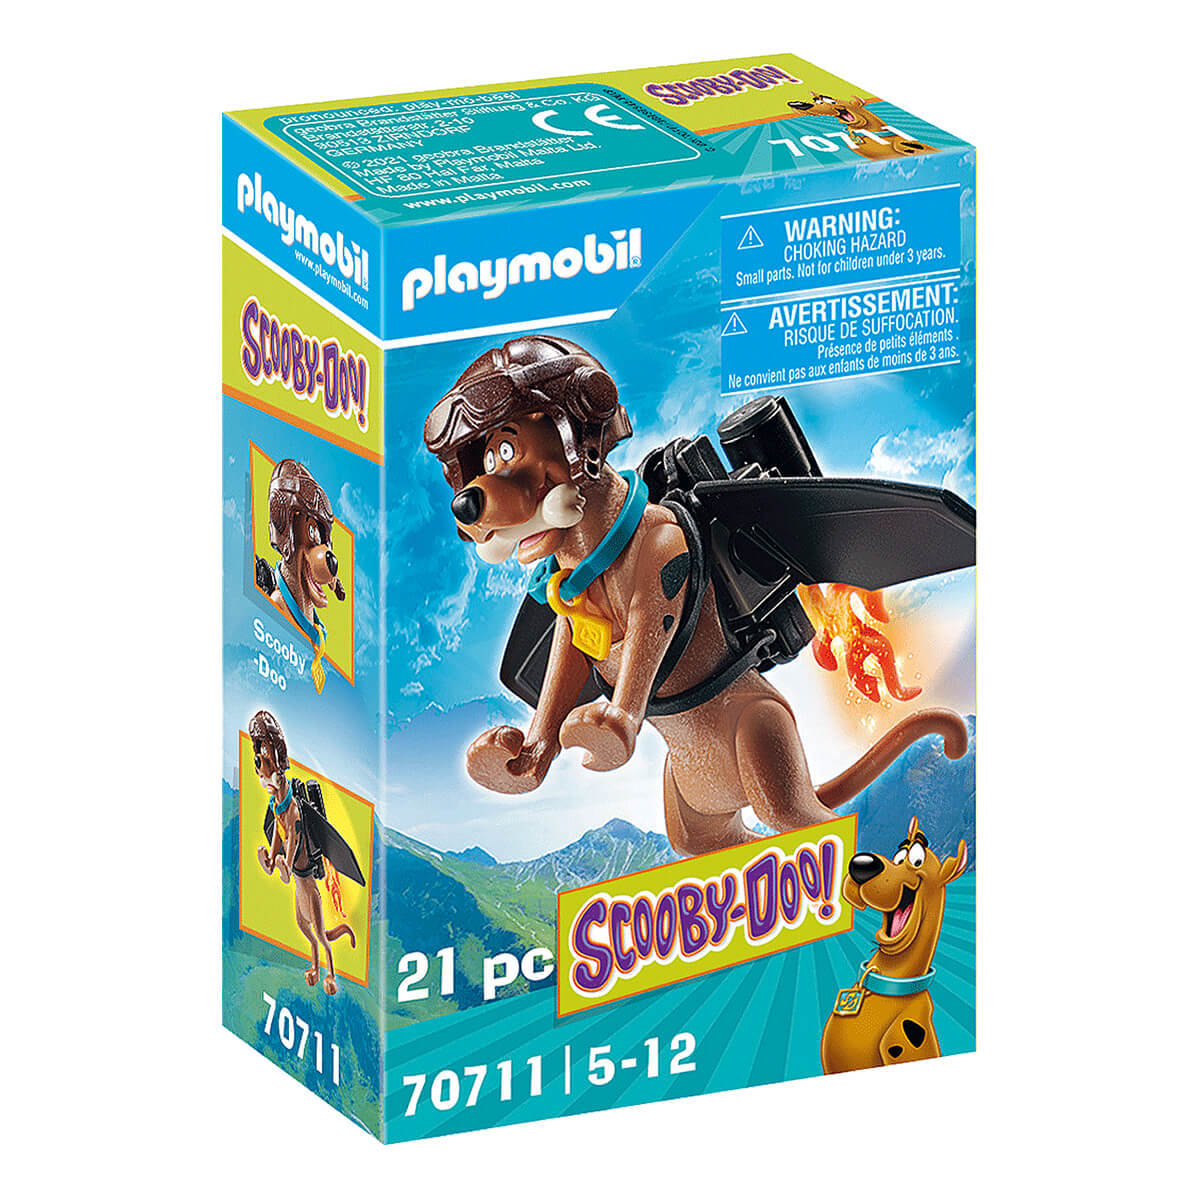 PLAYMOBIL Scooby-Doo! Collectible Pilot Figure (70711)